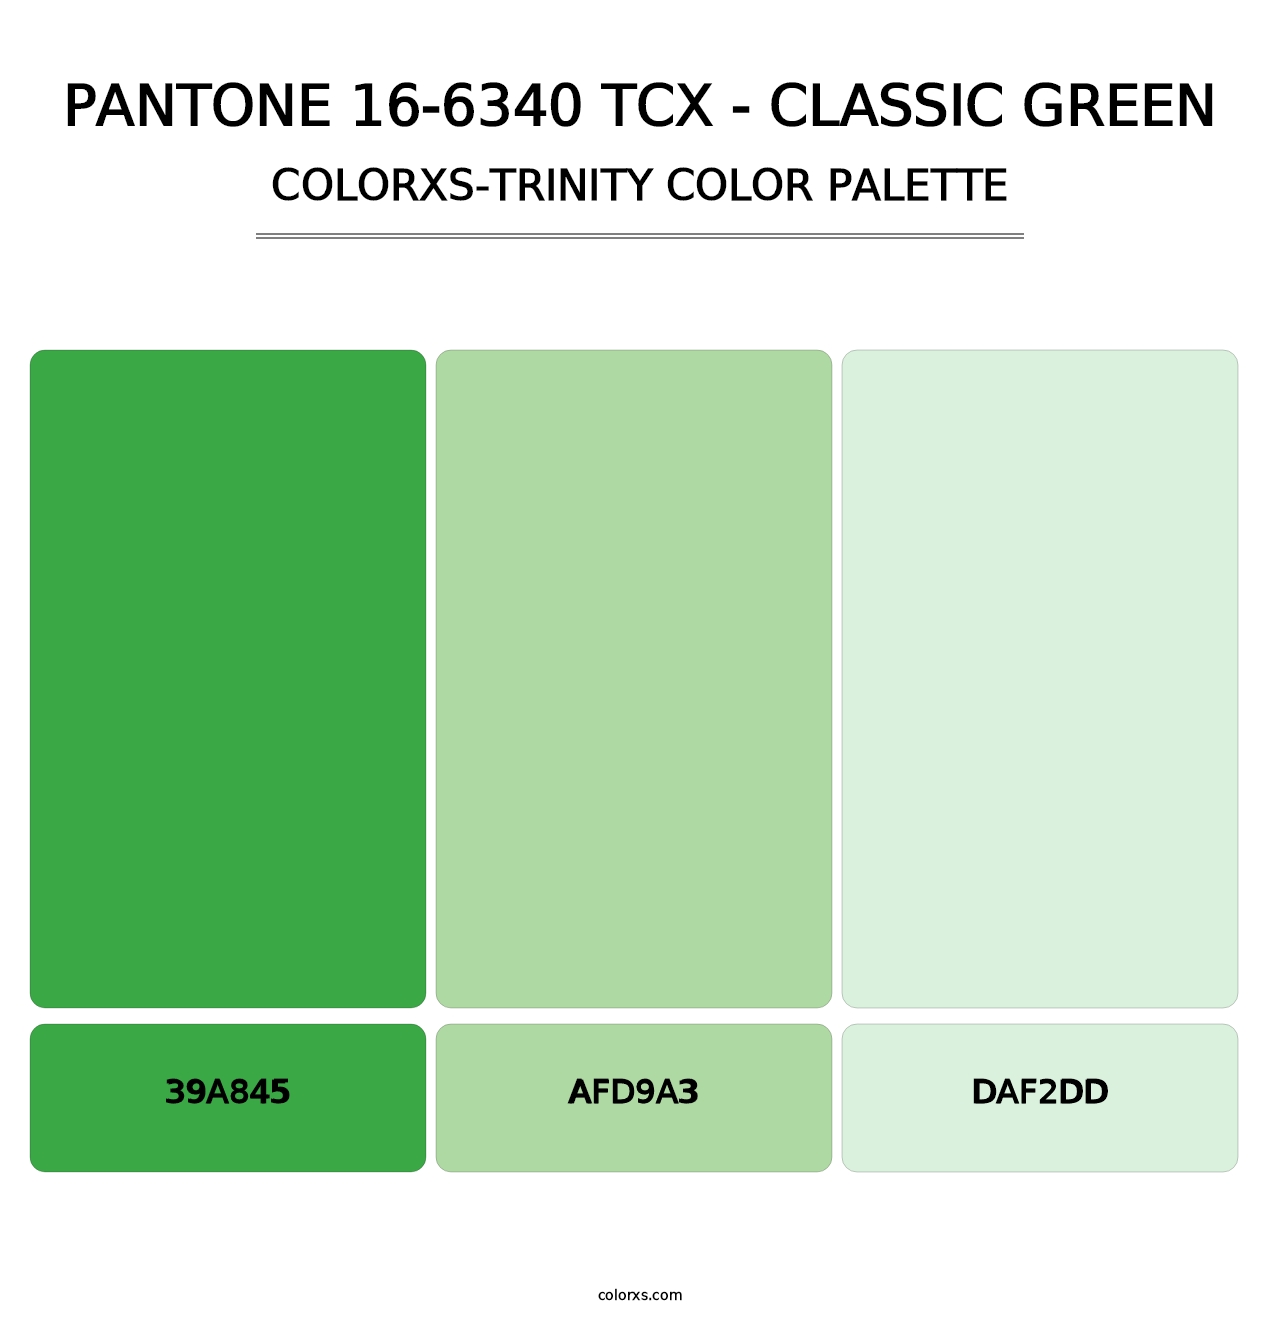 PANTONE 16-6340 TCX - Classic Green - Colorxs Trinity Palette